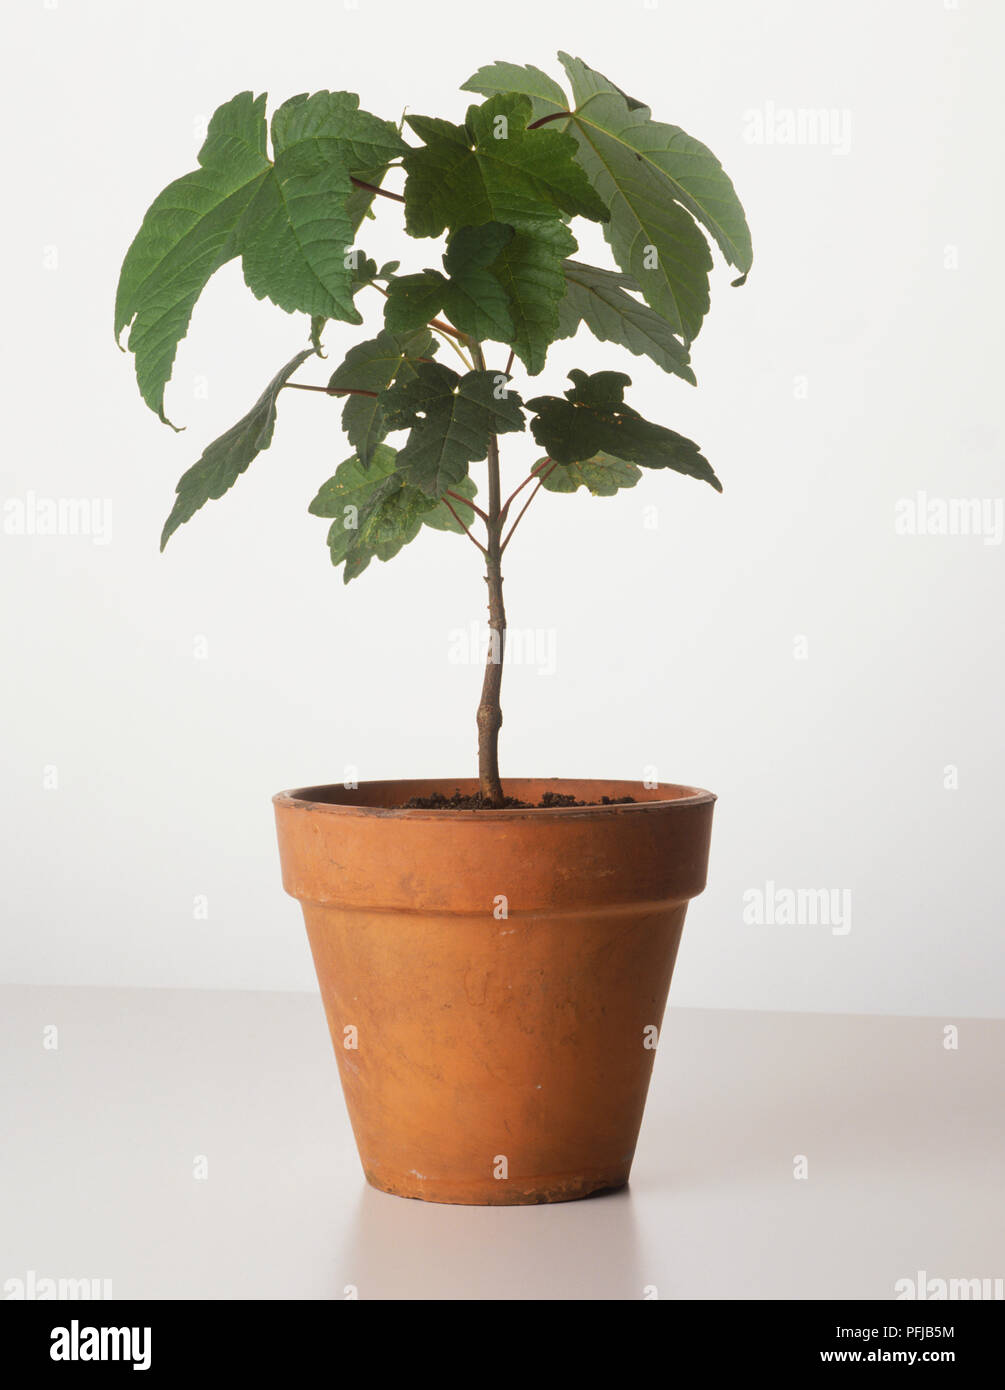 Acer pseudoplatanus, acero di monte, albero giovane pianta in vaso Foto Stock